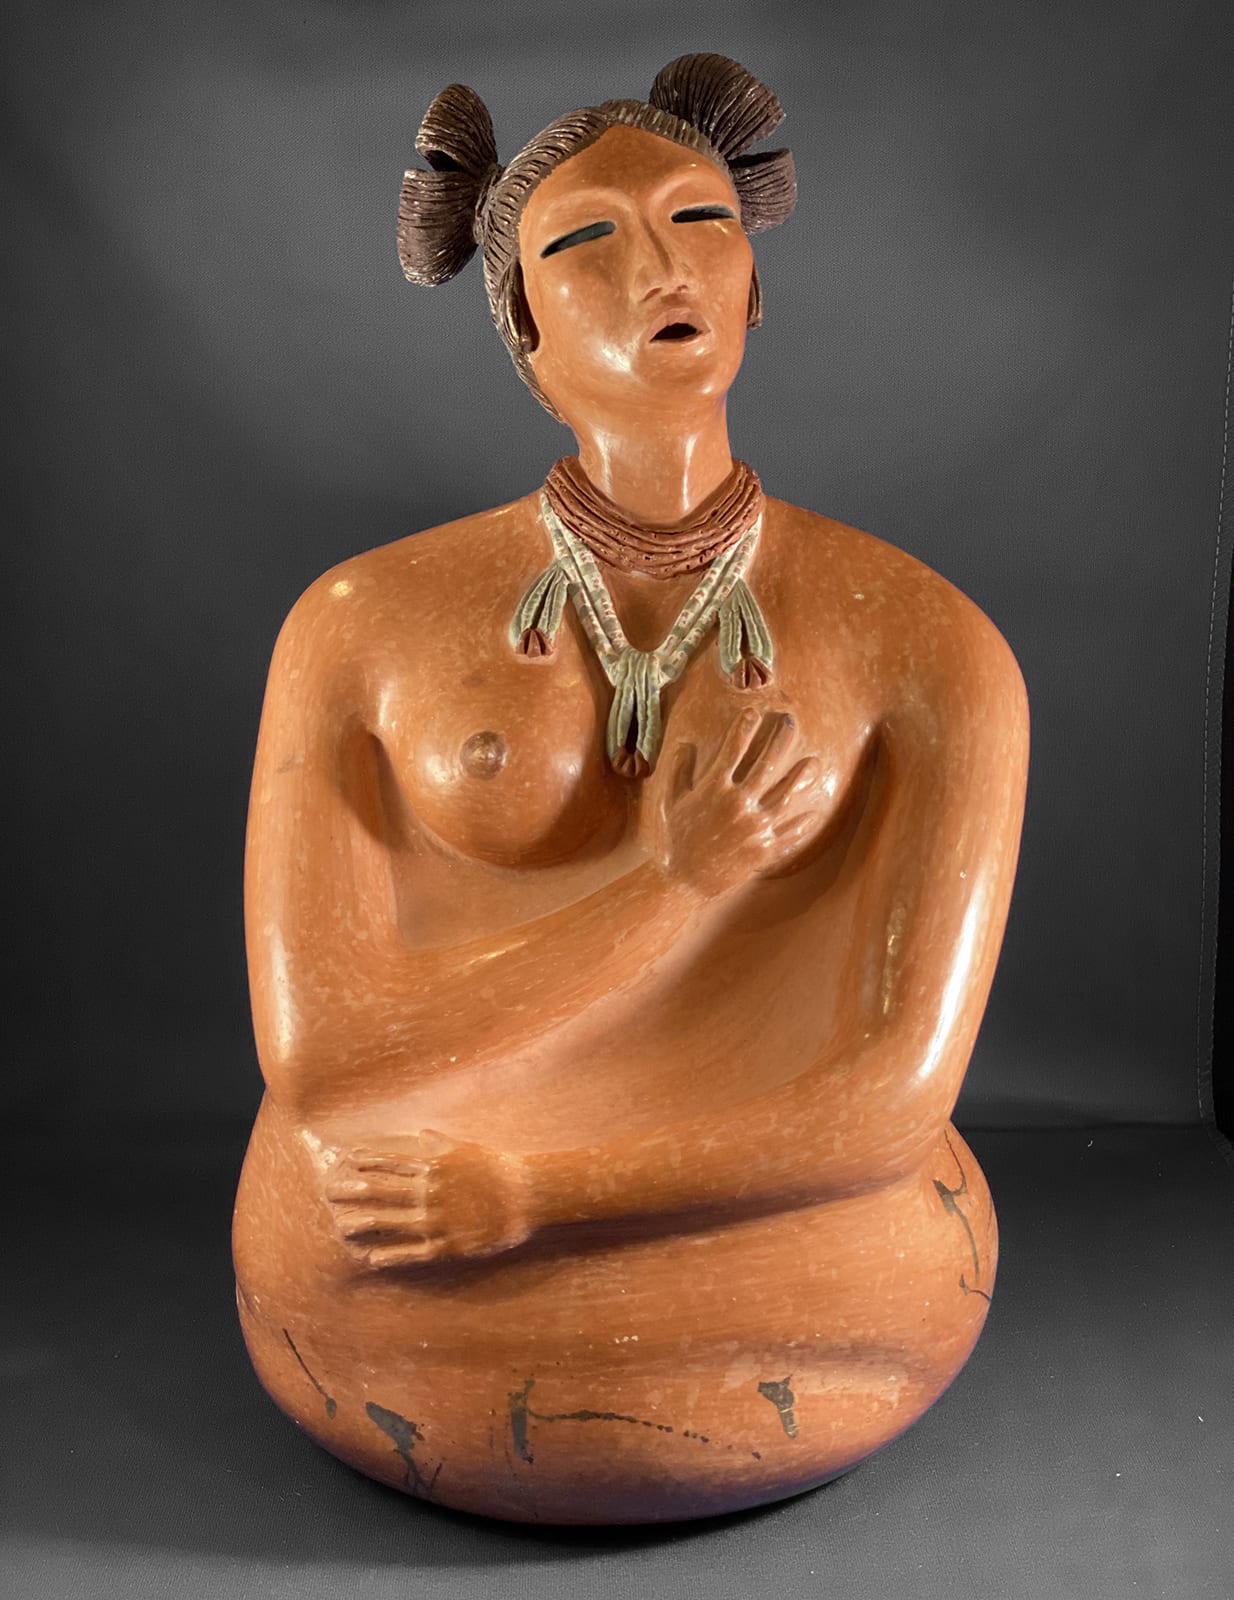 2019-20 Hopi maiden statue